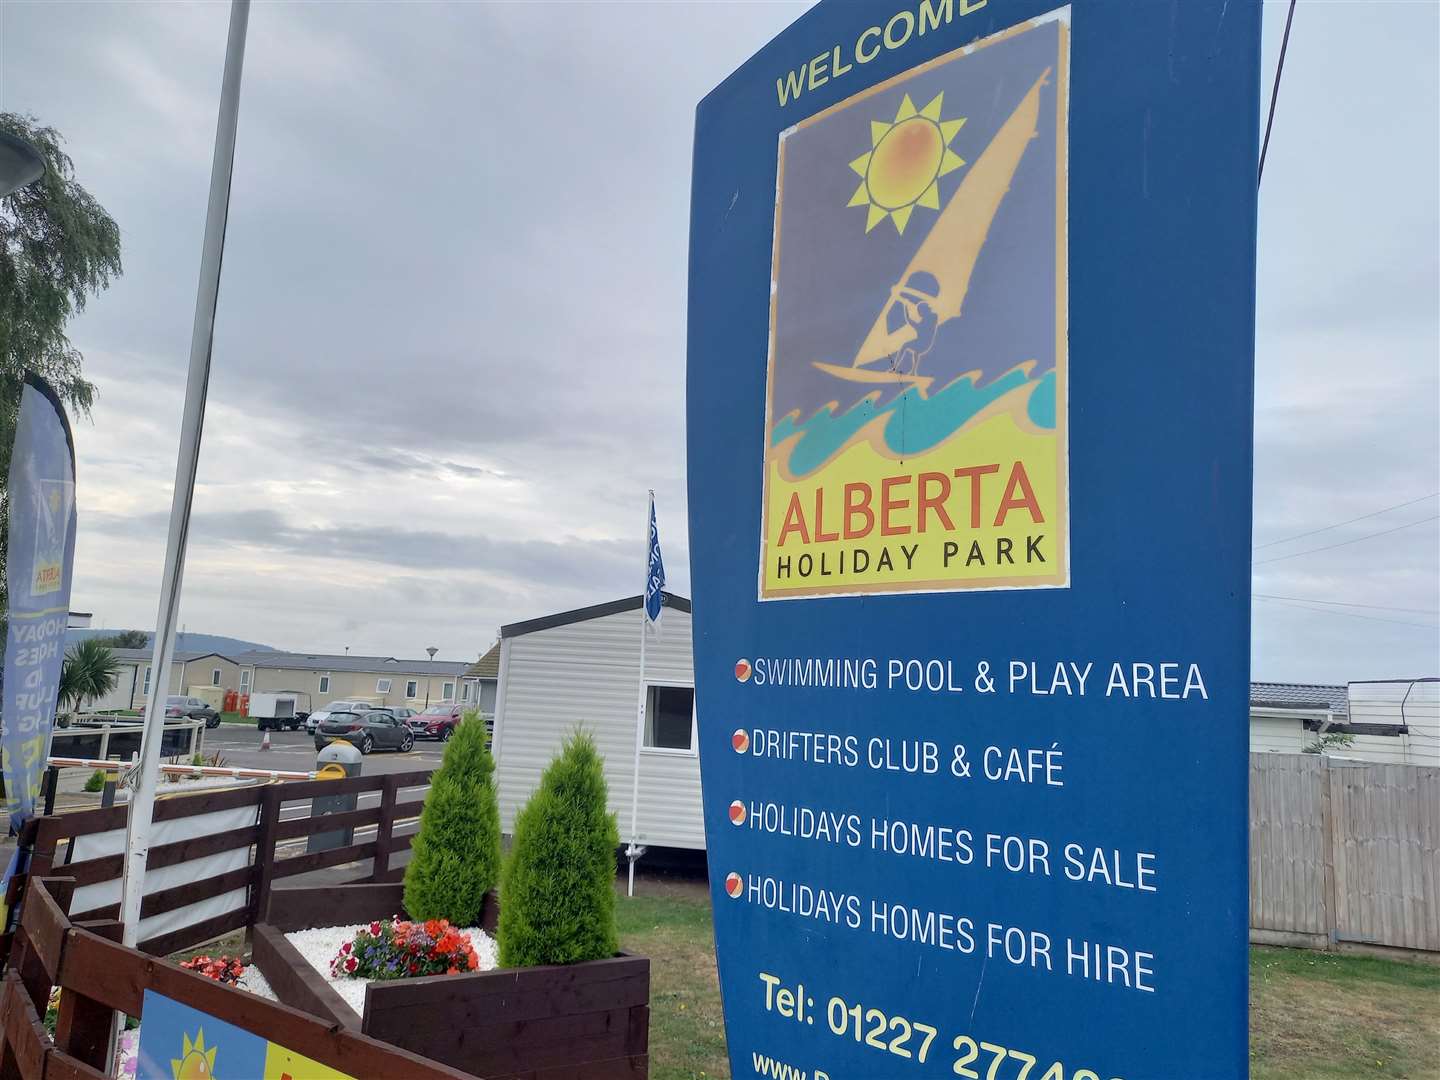 Alberta Holiday Park, in Seasalter